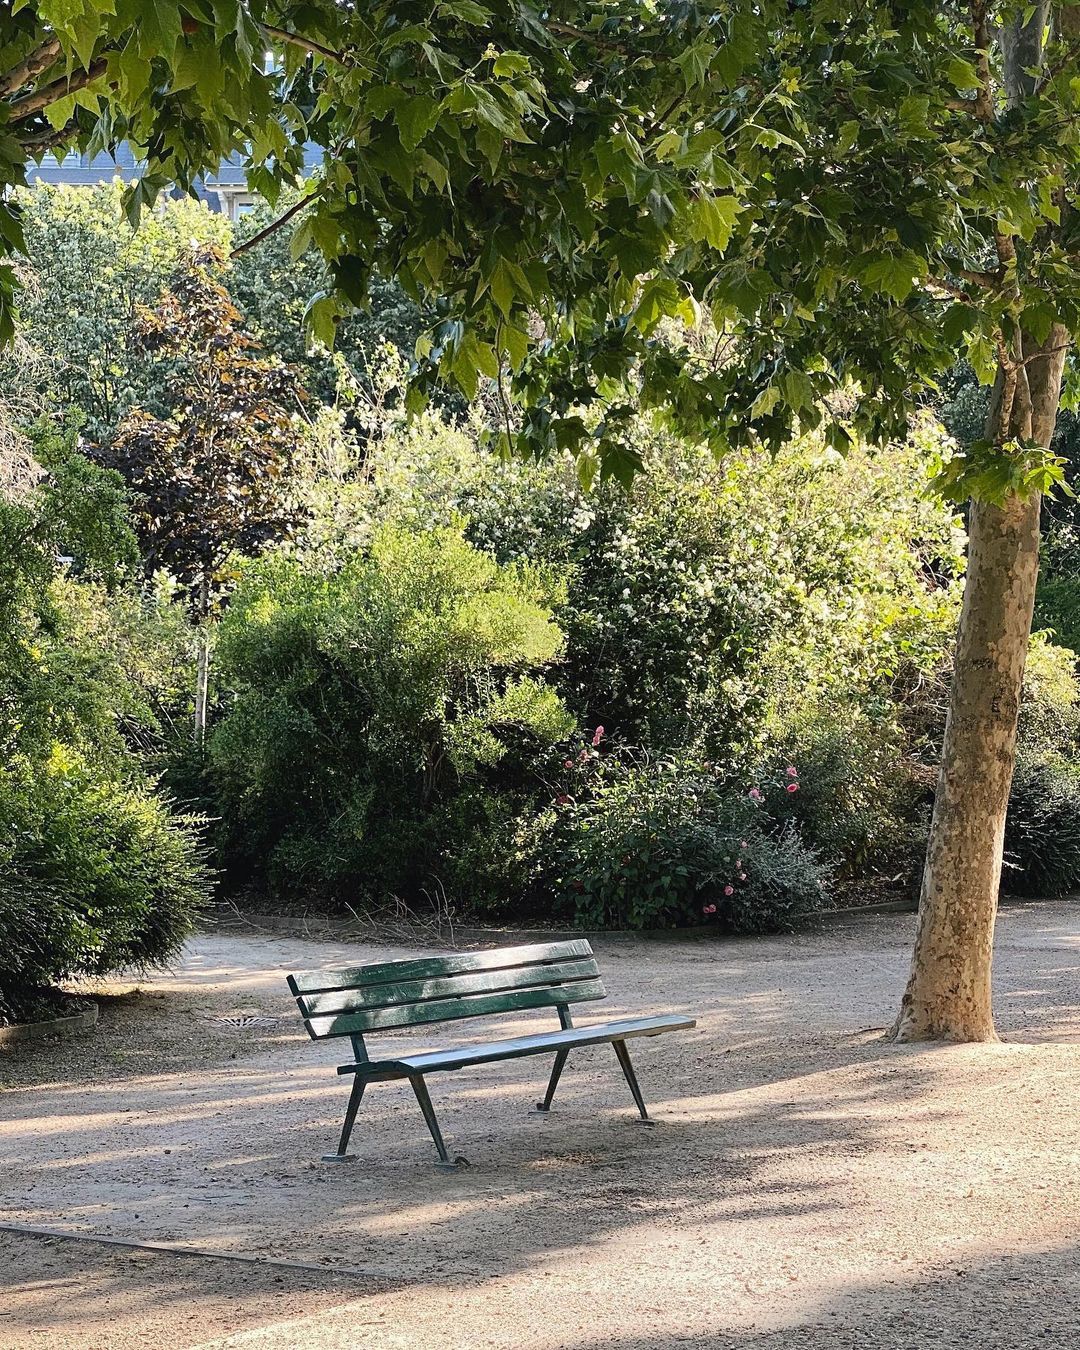 A green bench in a Paris park